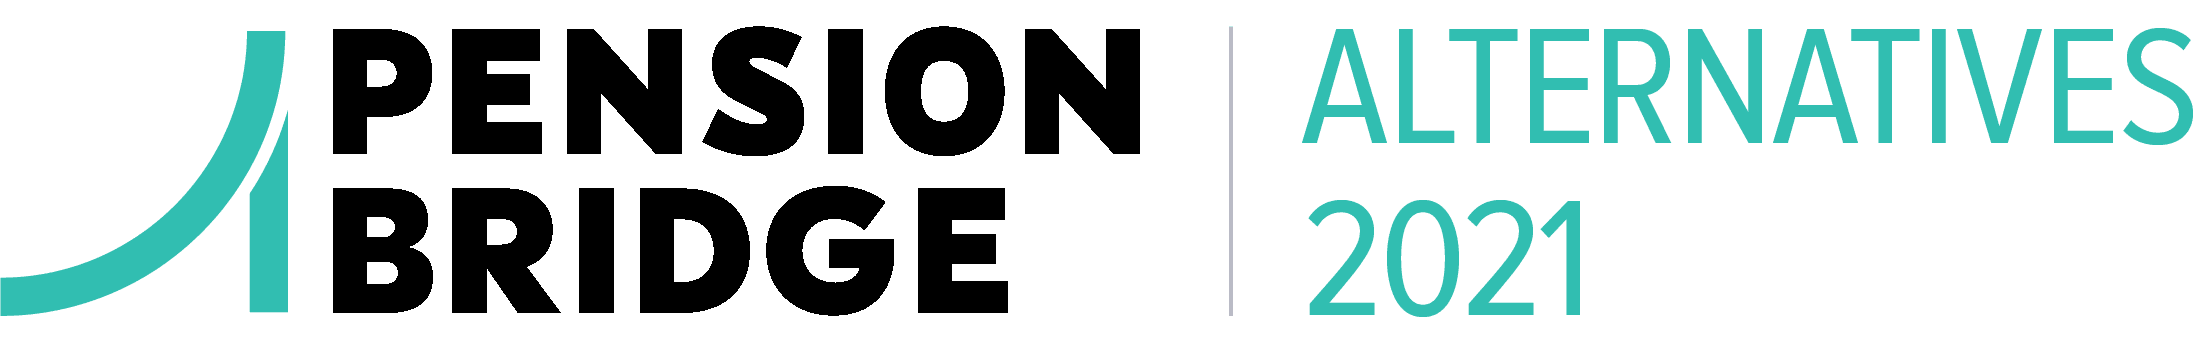 Pension Bridge Alternatives 2021 Conference Logo